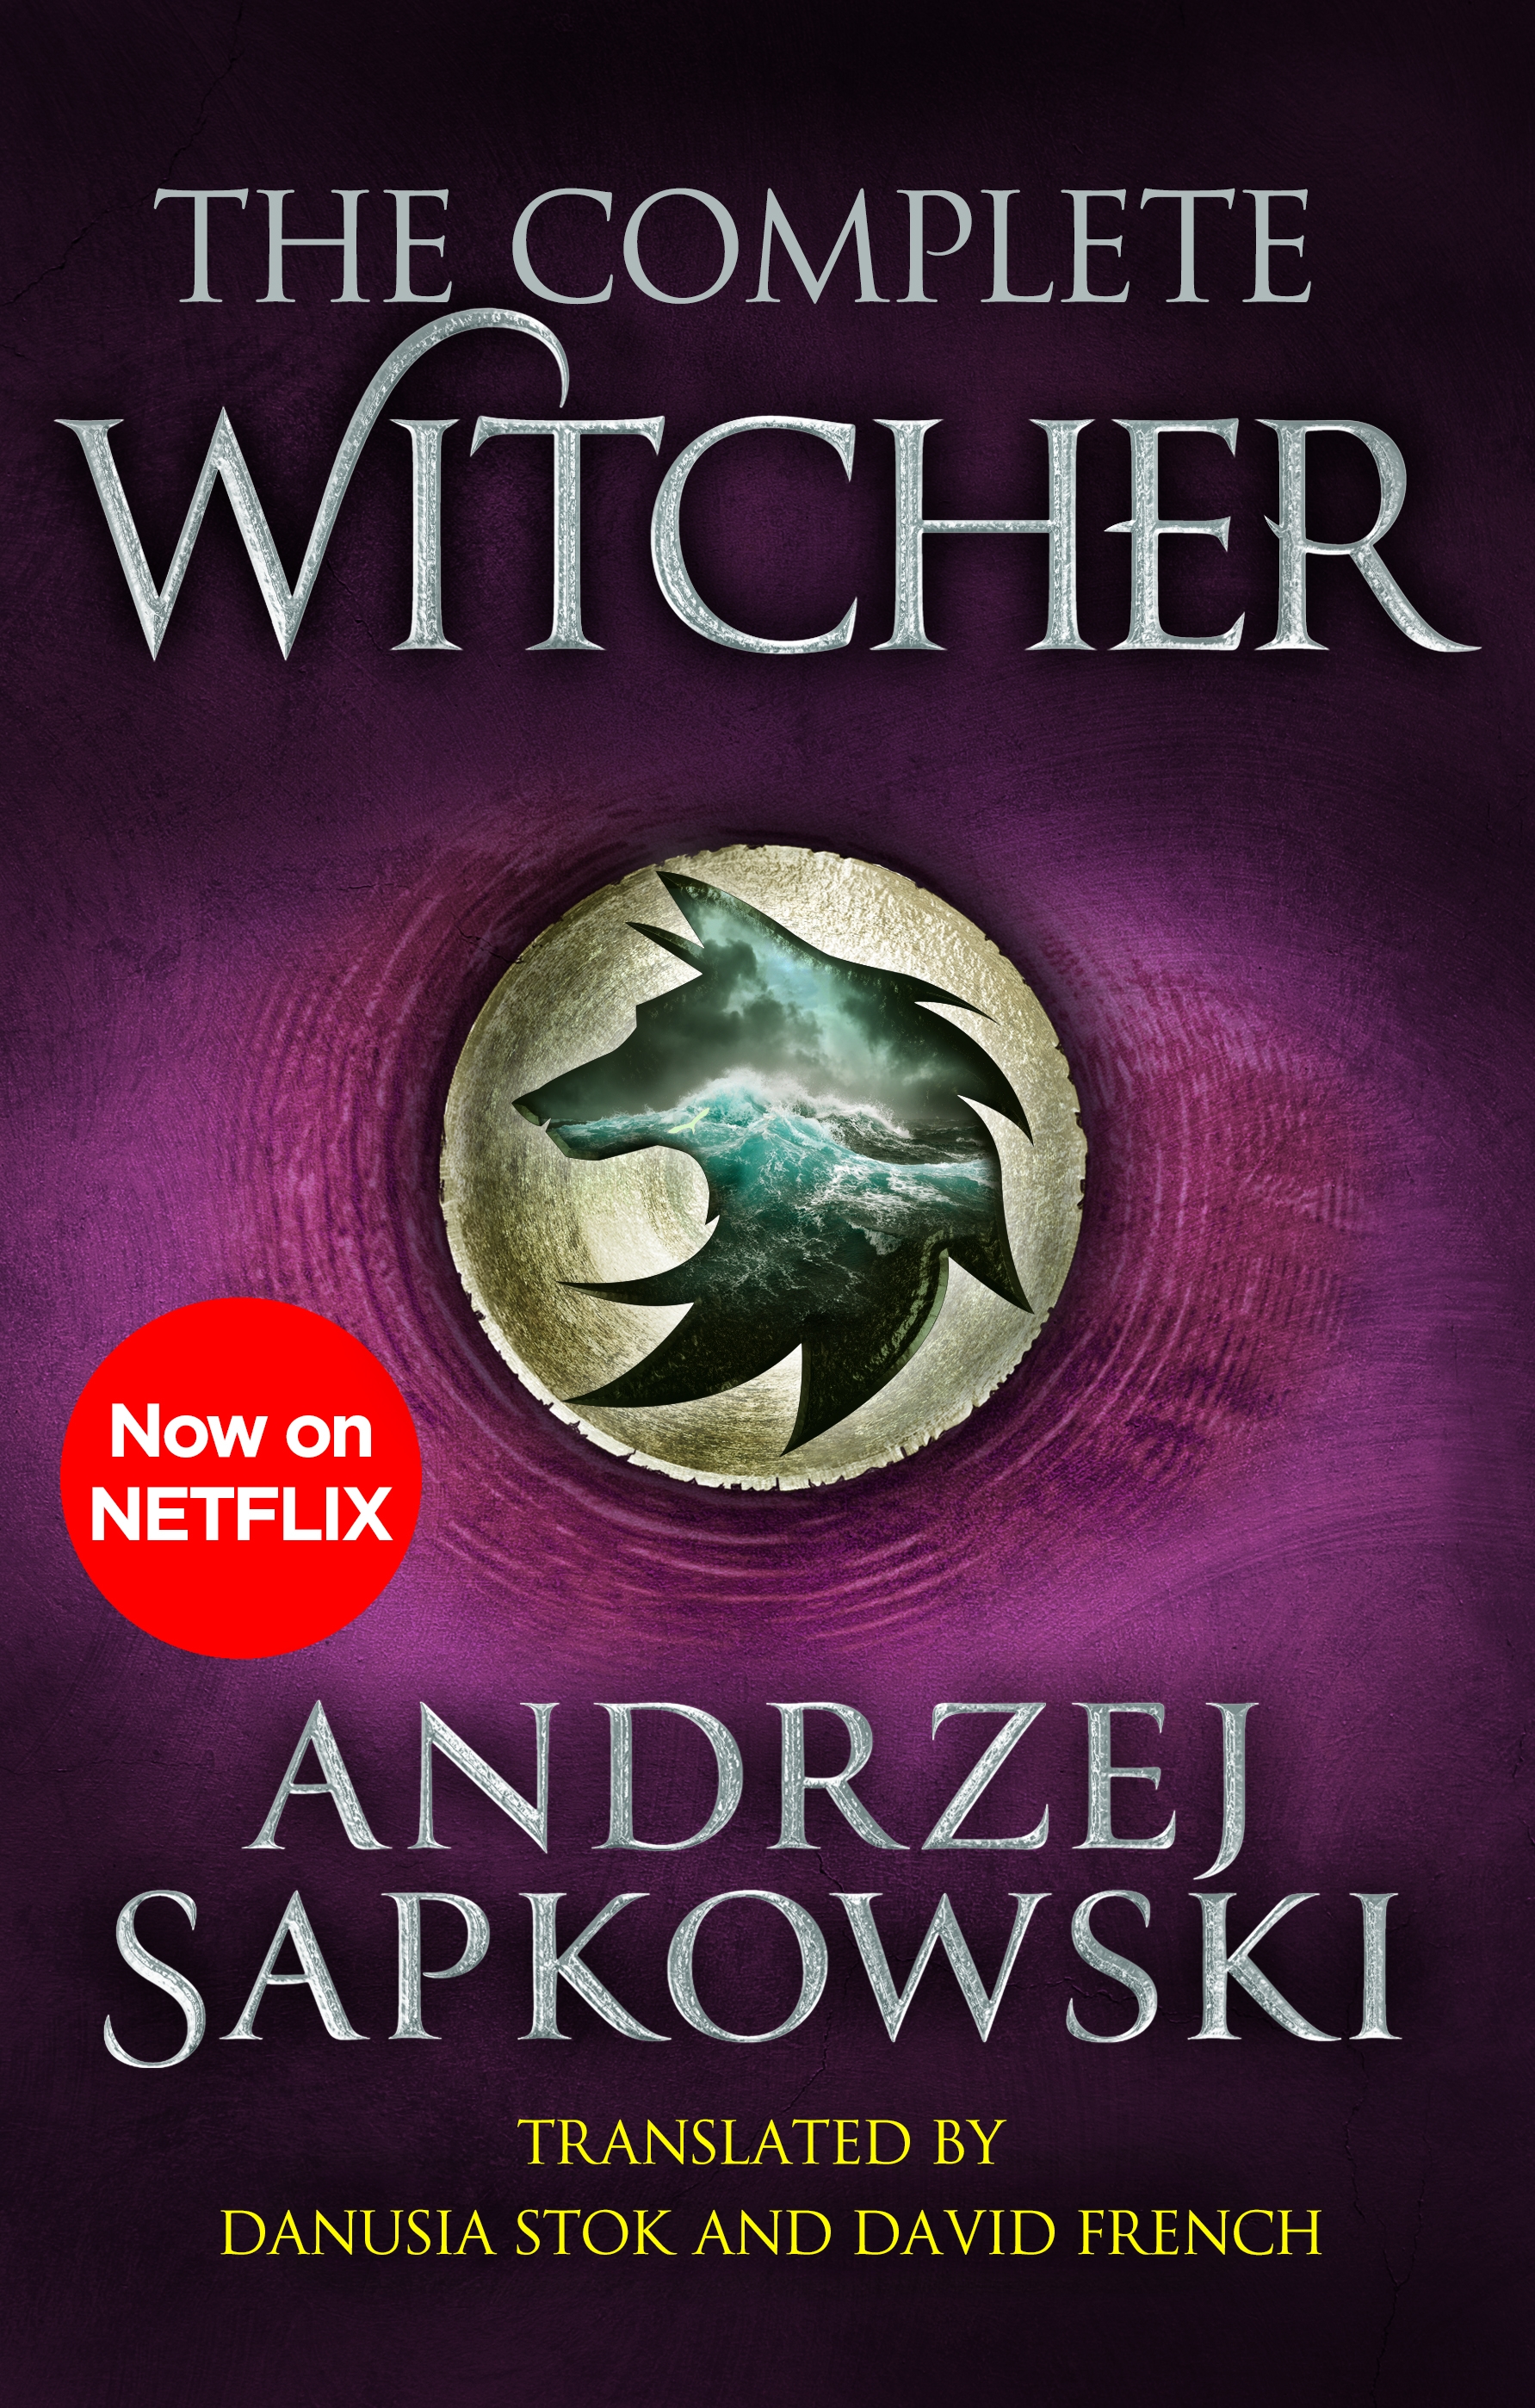 The Complete Witcher Novels by Andrzej Sapkowski | Gollancz - Bringing